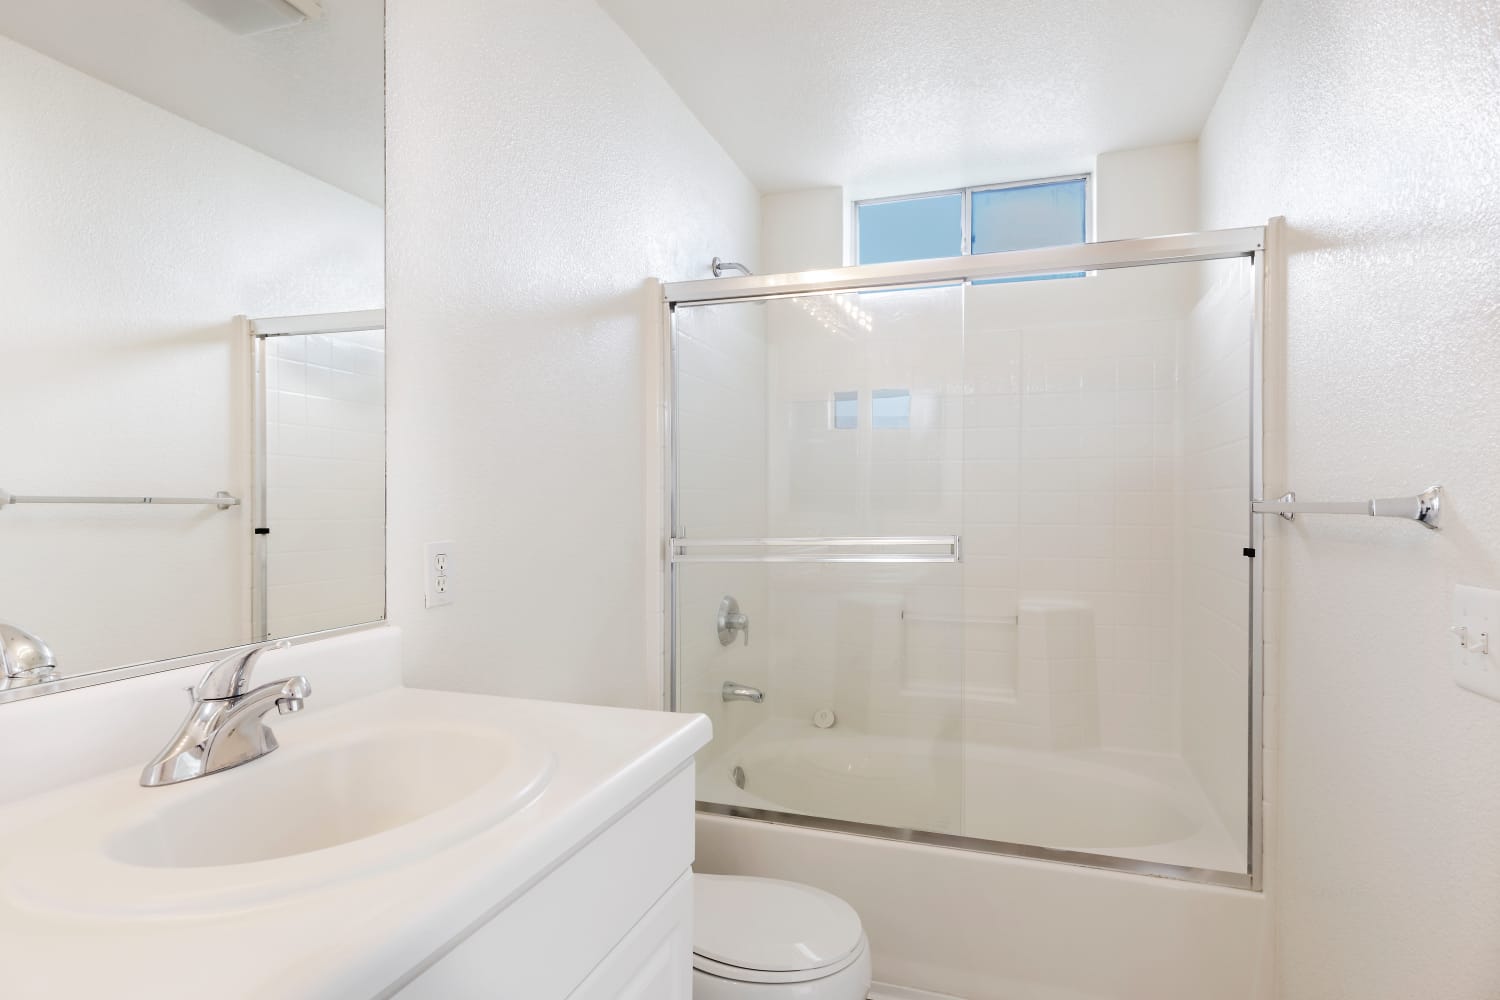 A bright, white bathroom at Park Hacienda Apartments in Pleasanton, California